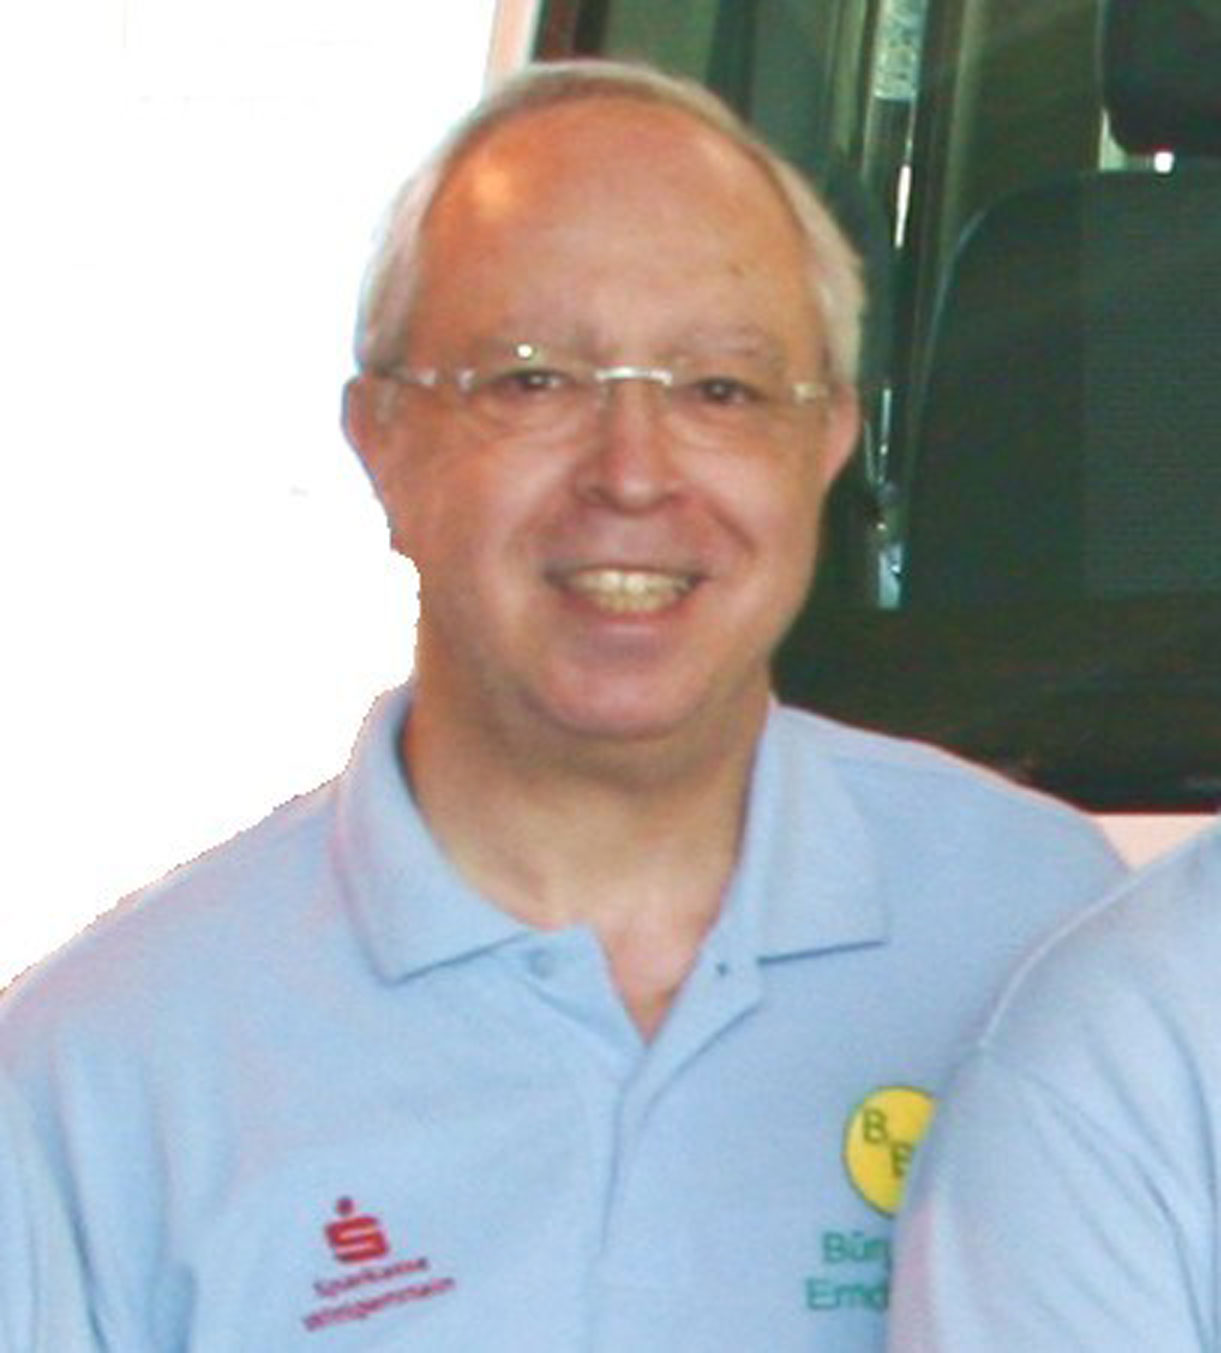 Joachim Litz Wohnort: Schameder aktiv seit 2012. Axel Jacobi